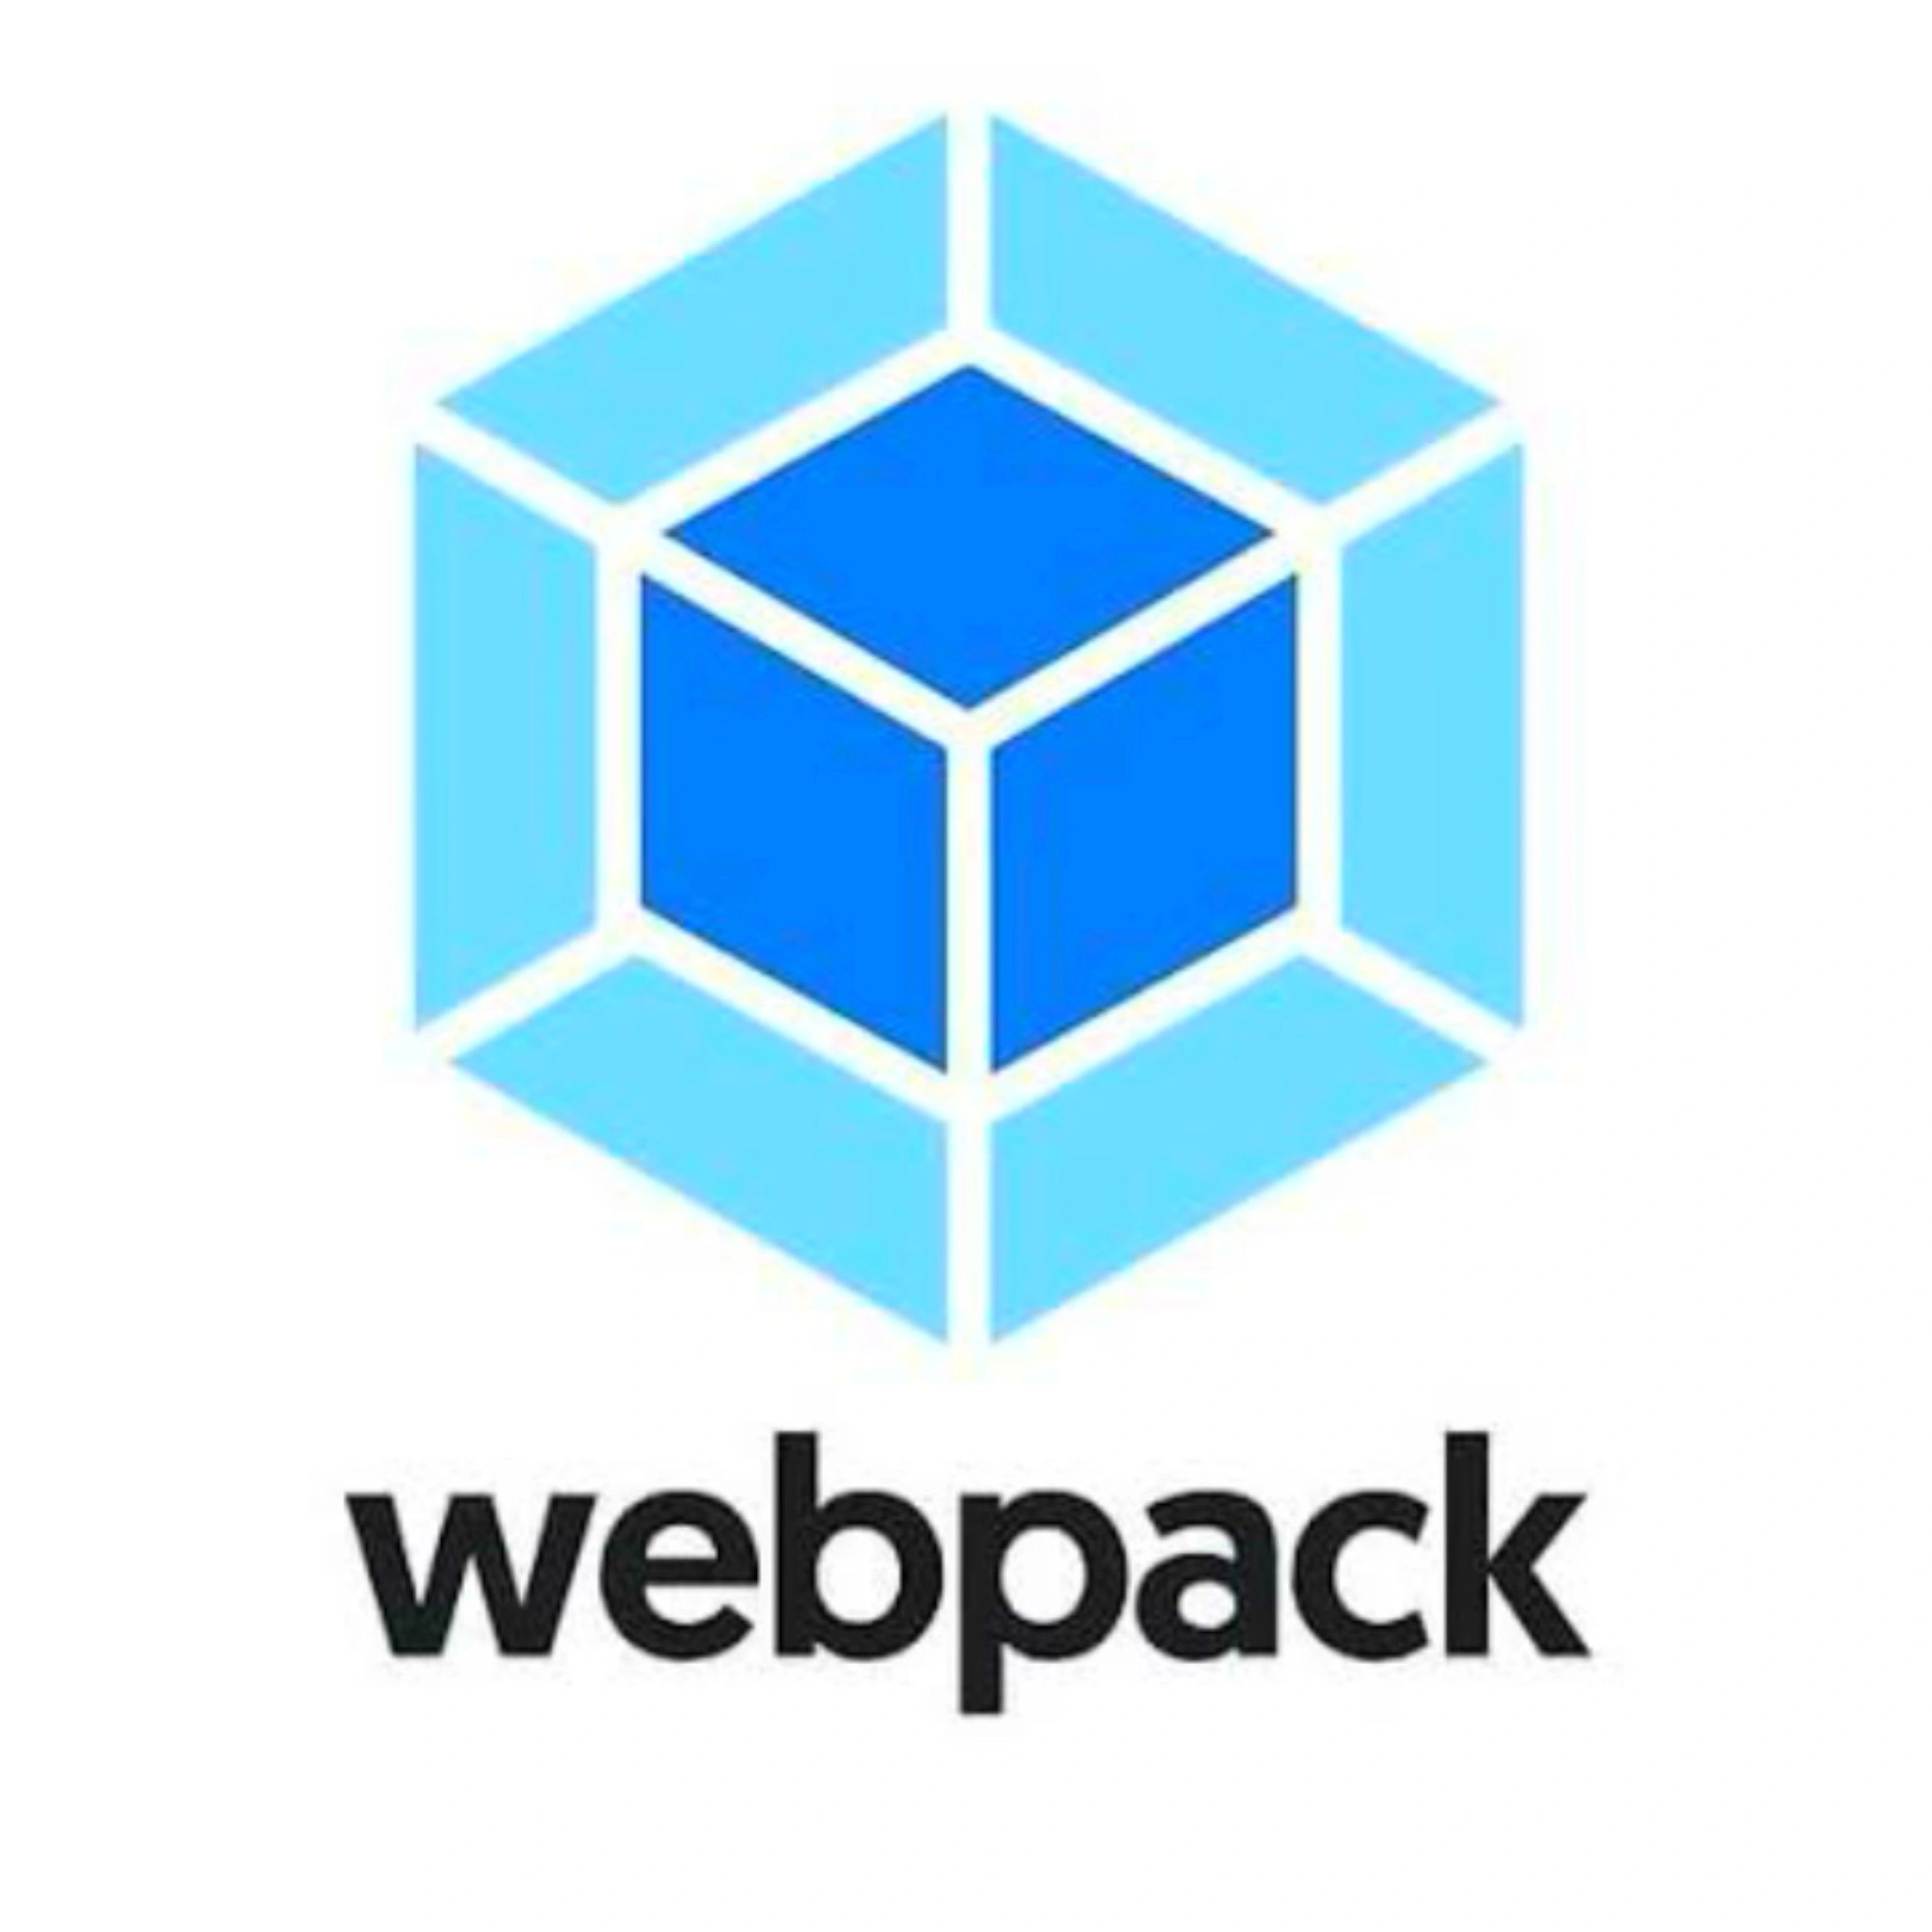 Webpack Forums logo